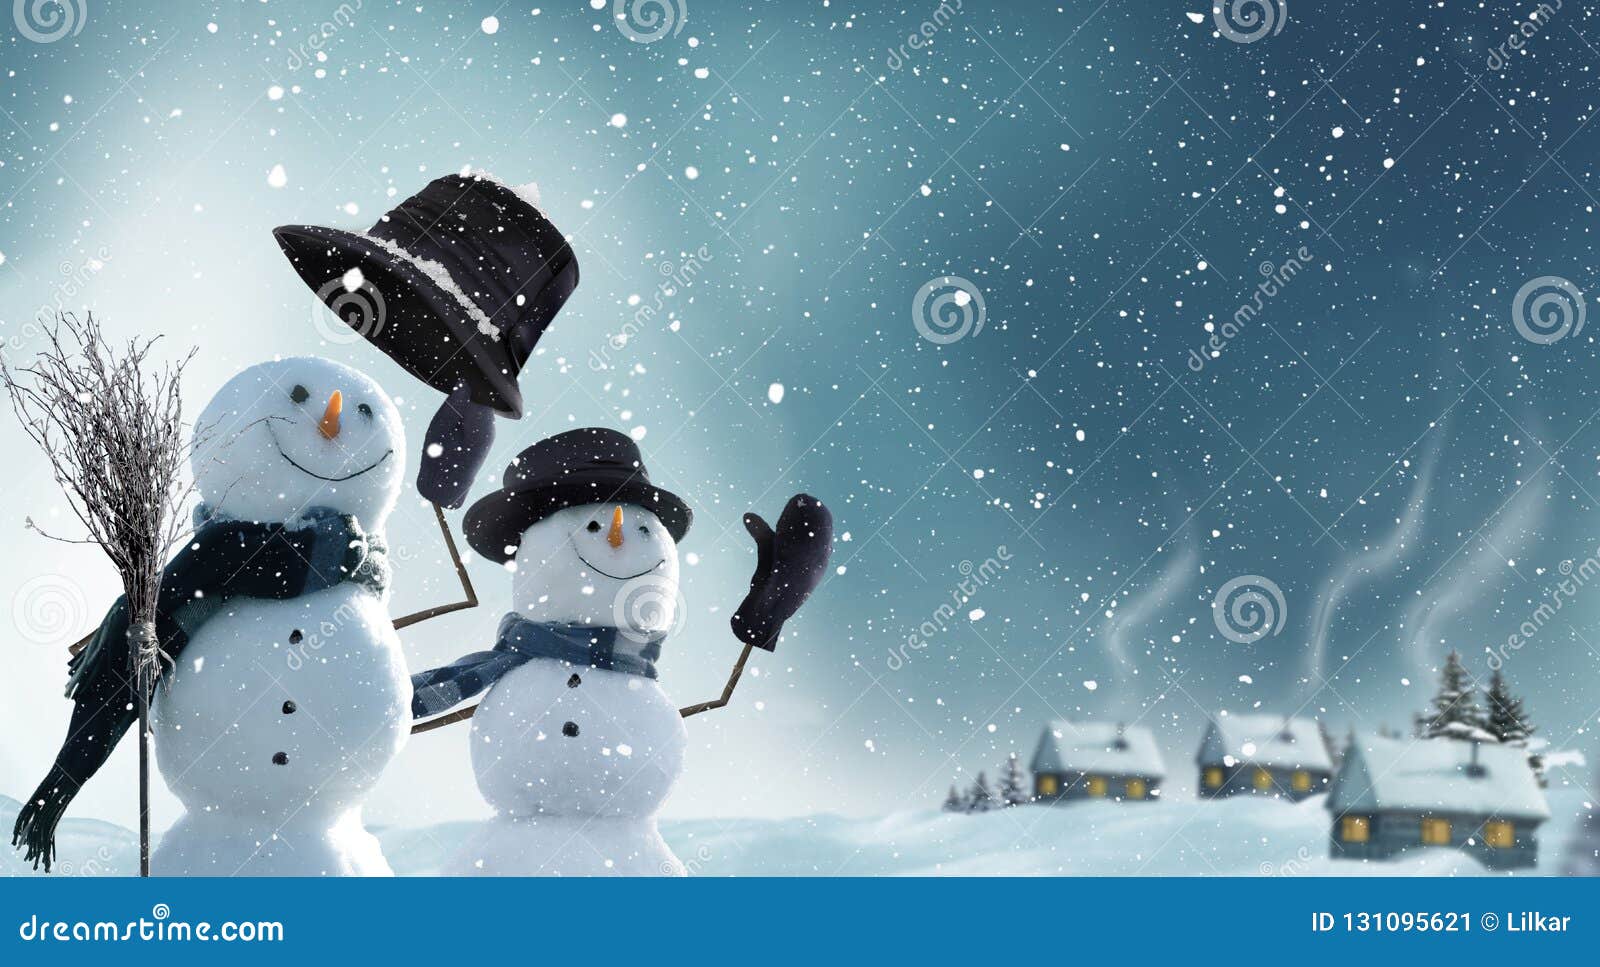 two snowmen standing in winter christmas landscape.